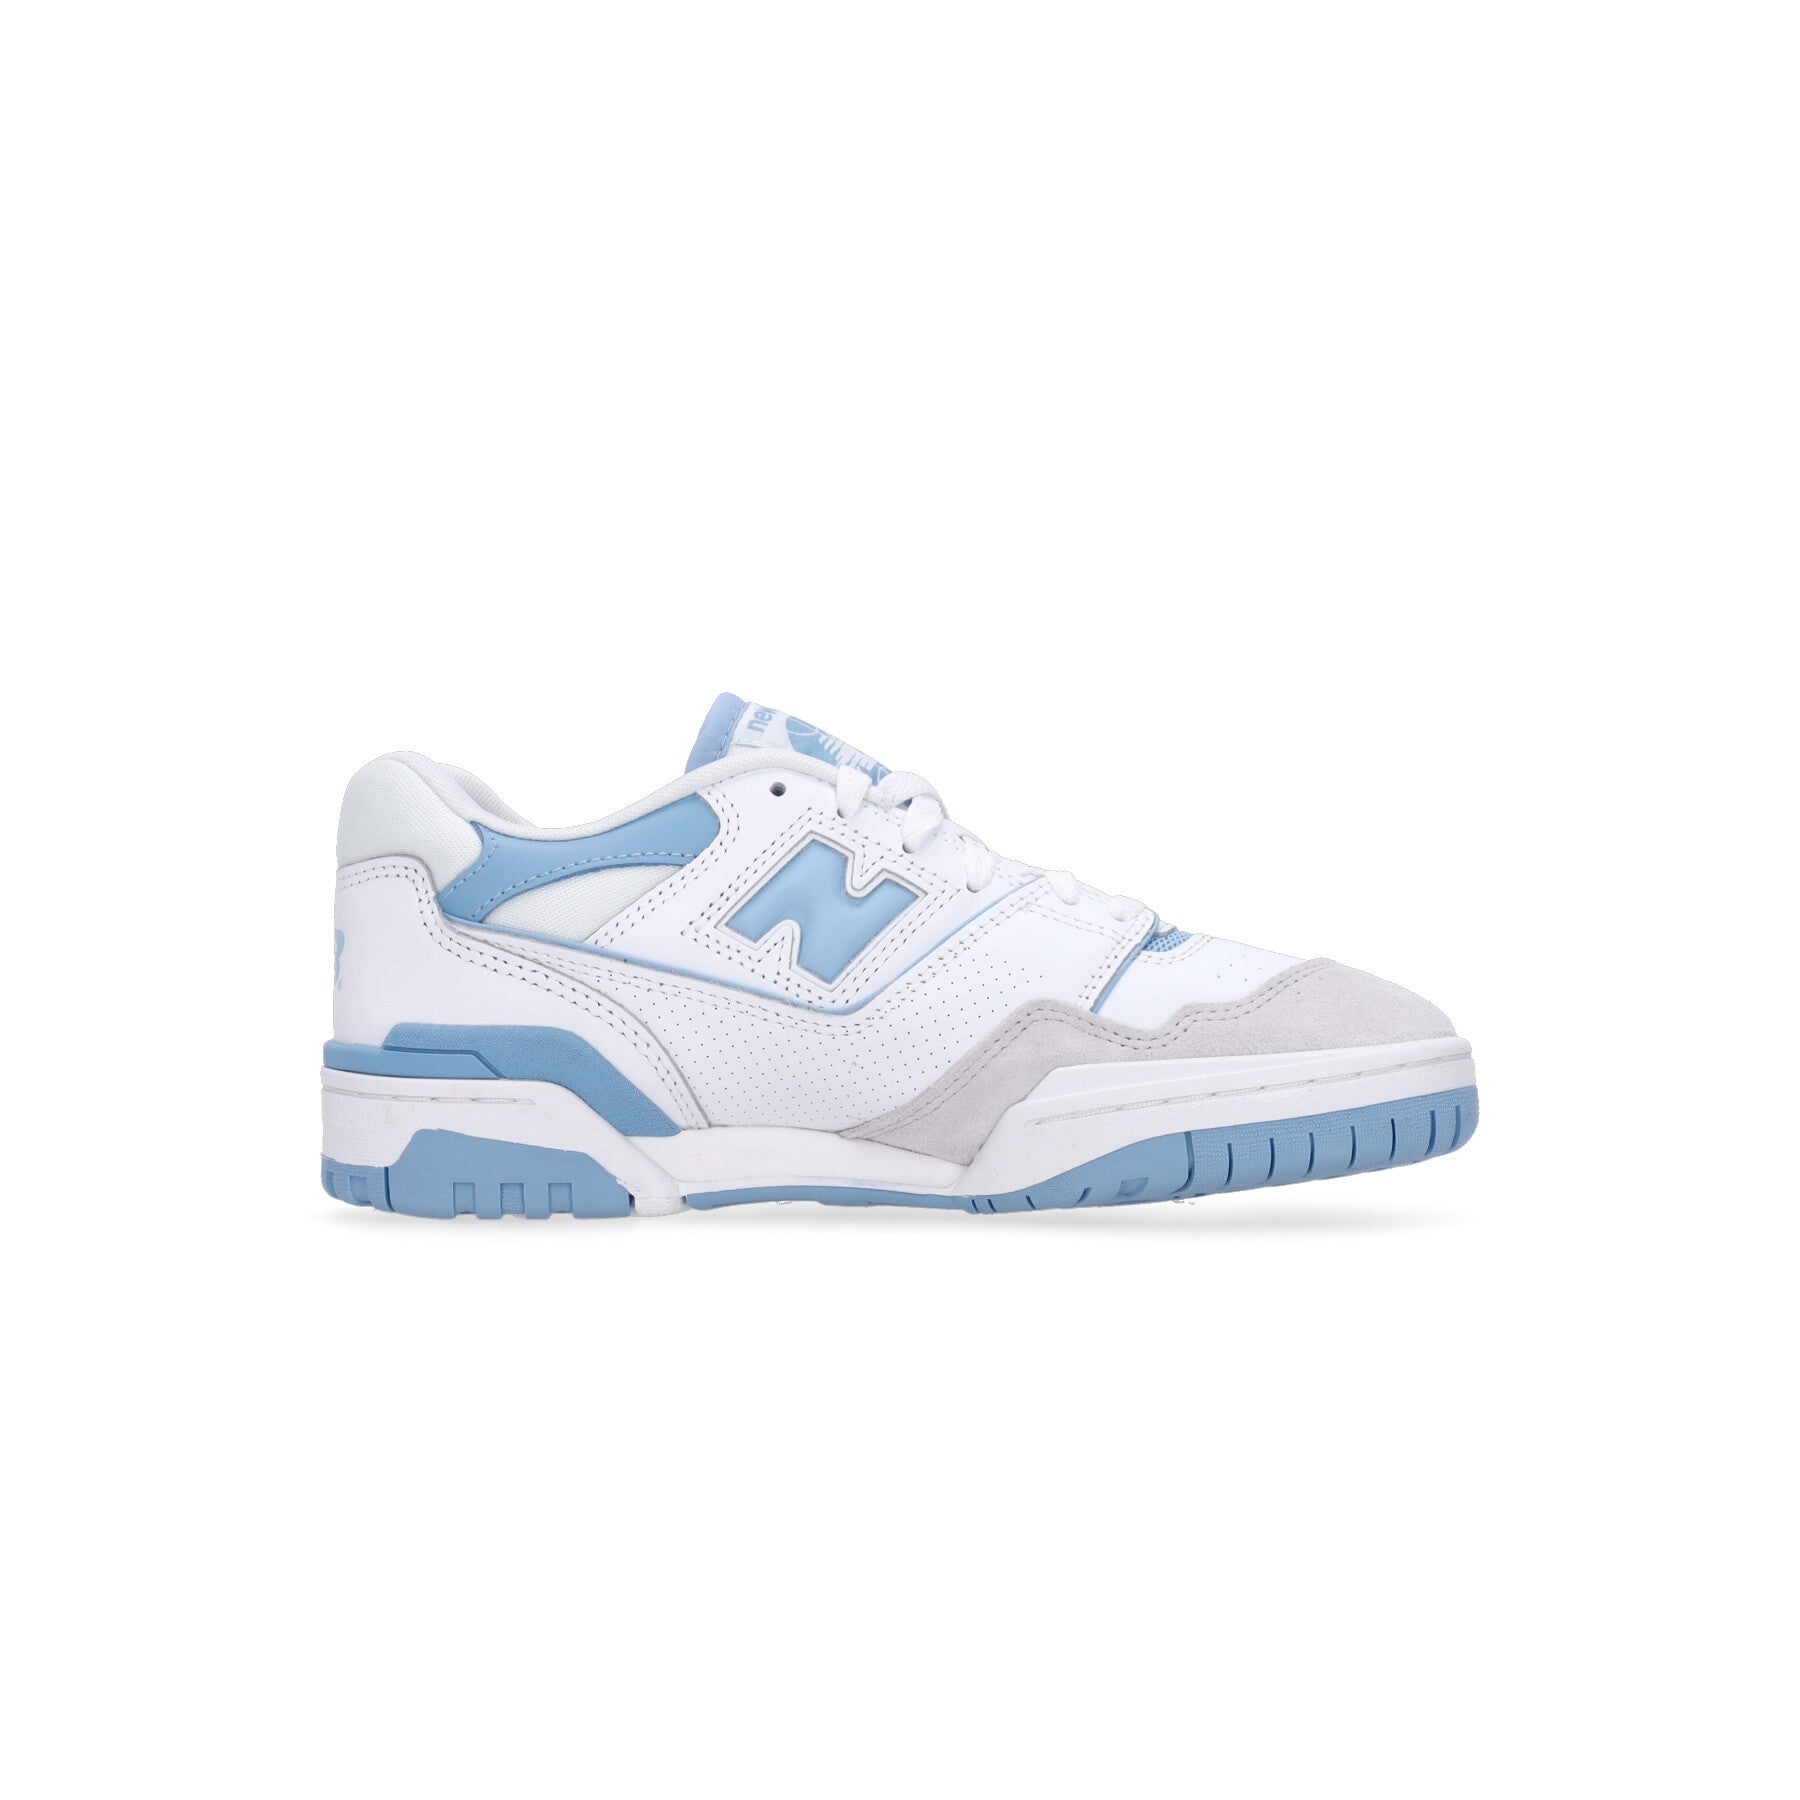 Low Men's Shoe 550 White/blue